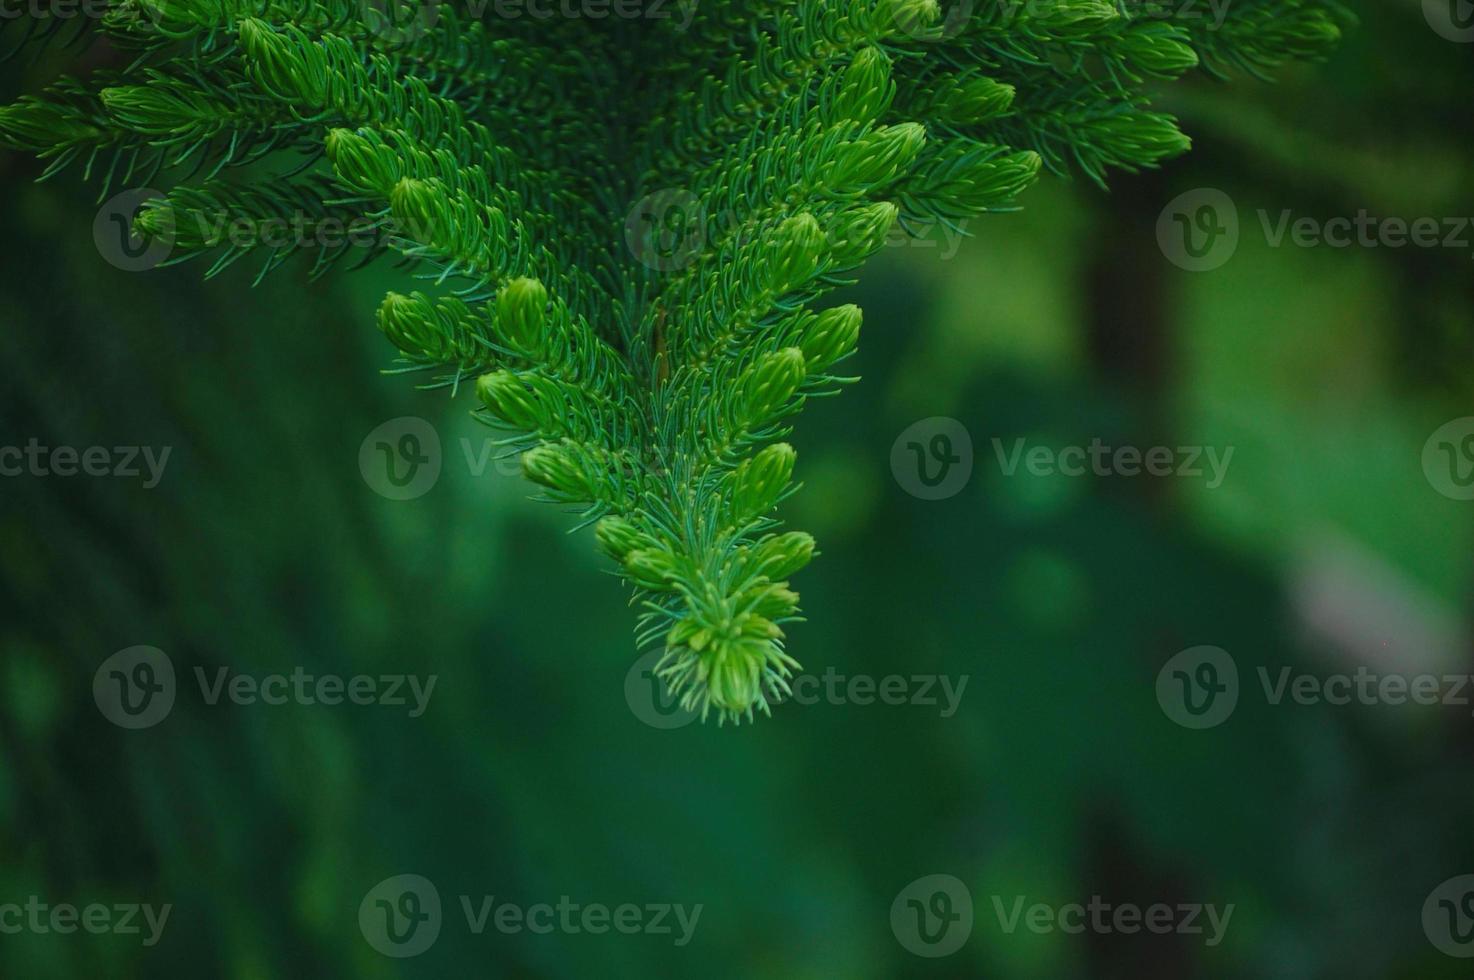 groene verse planten gras close-up voor achtergrond foto